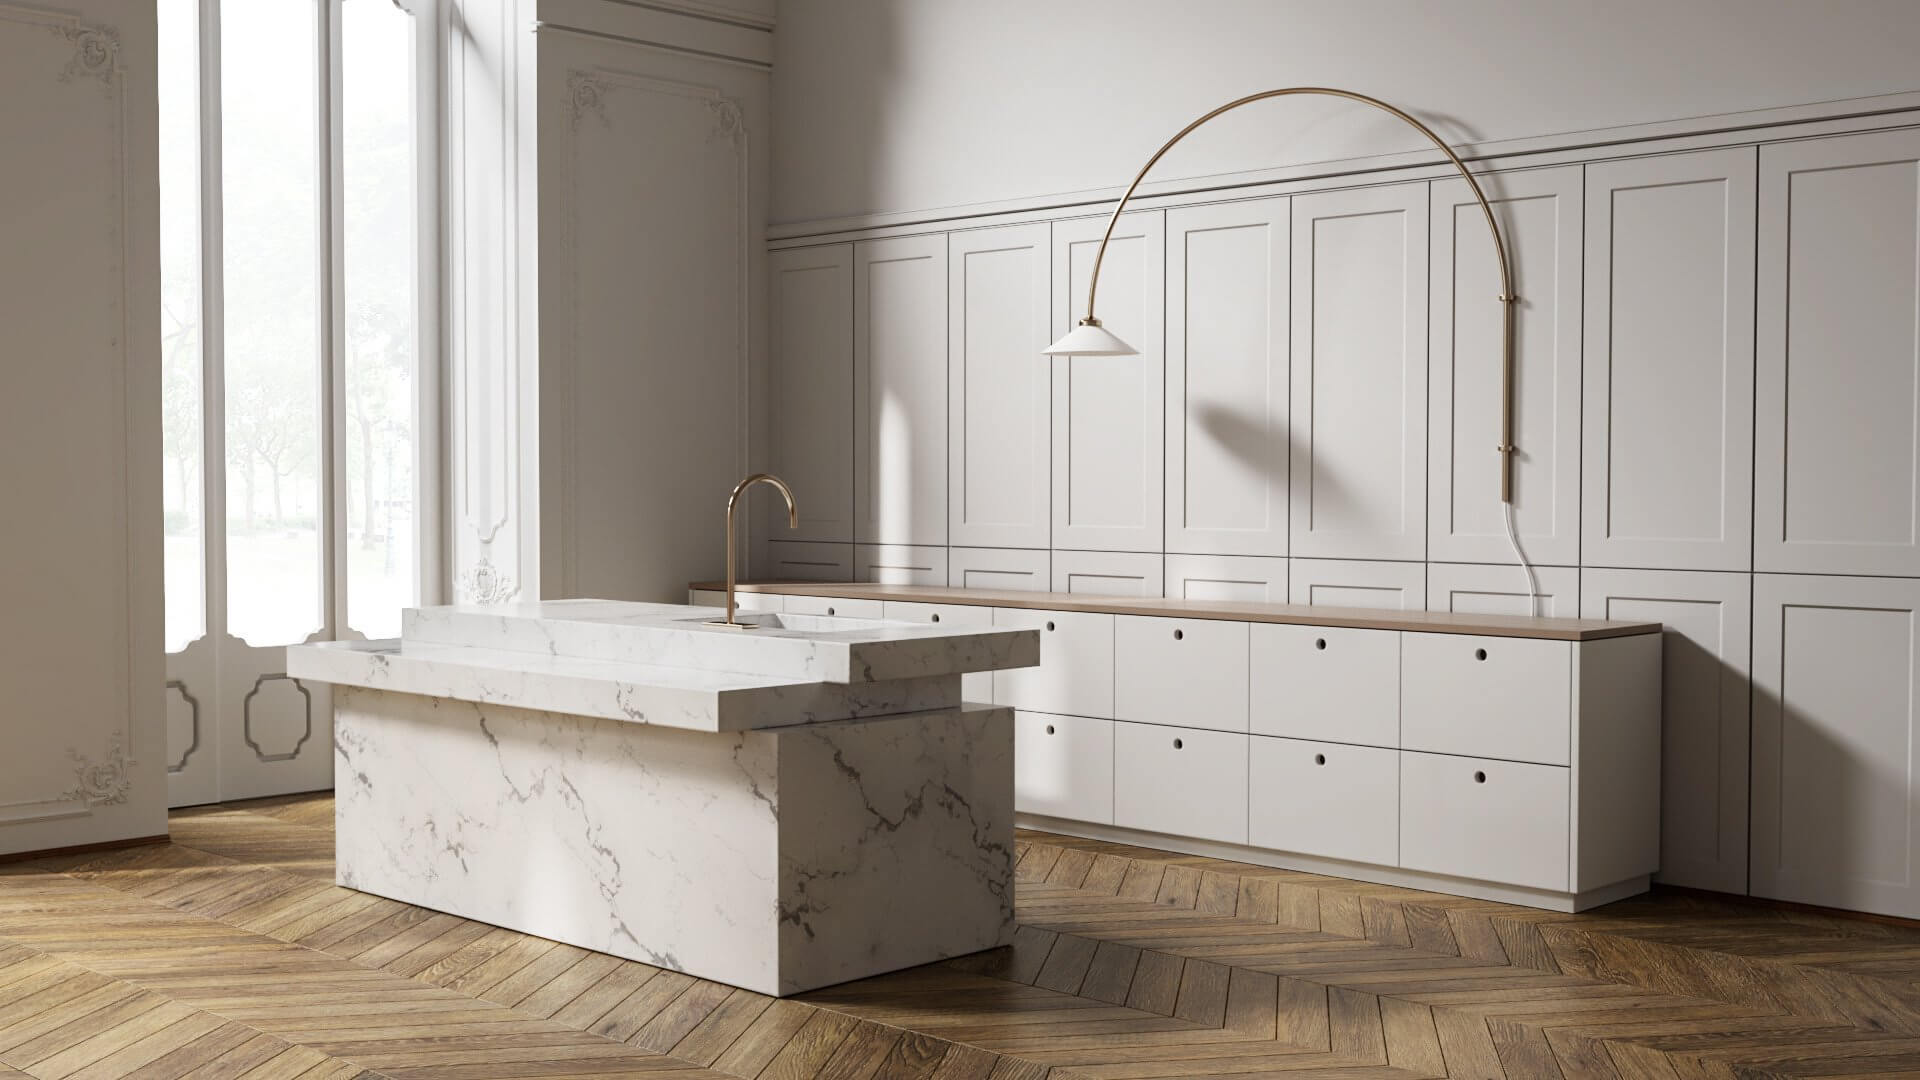 Stylish and classic living room kitchen marble - cgi visualization